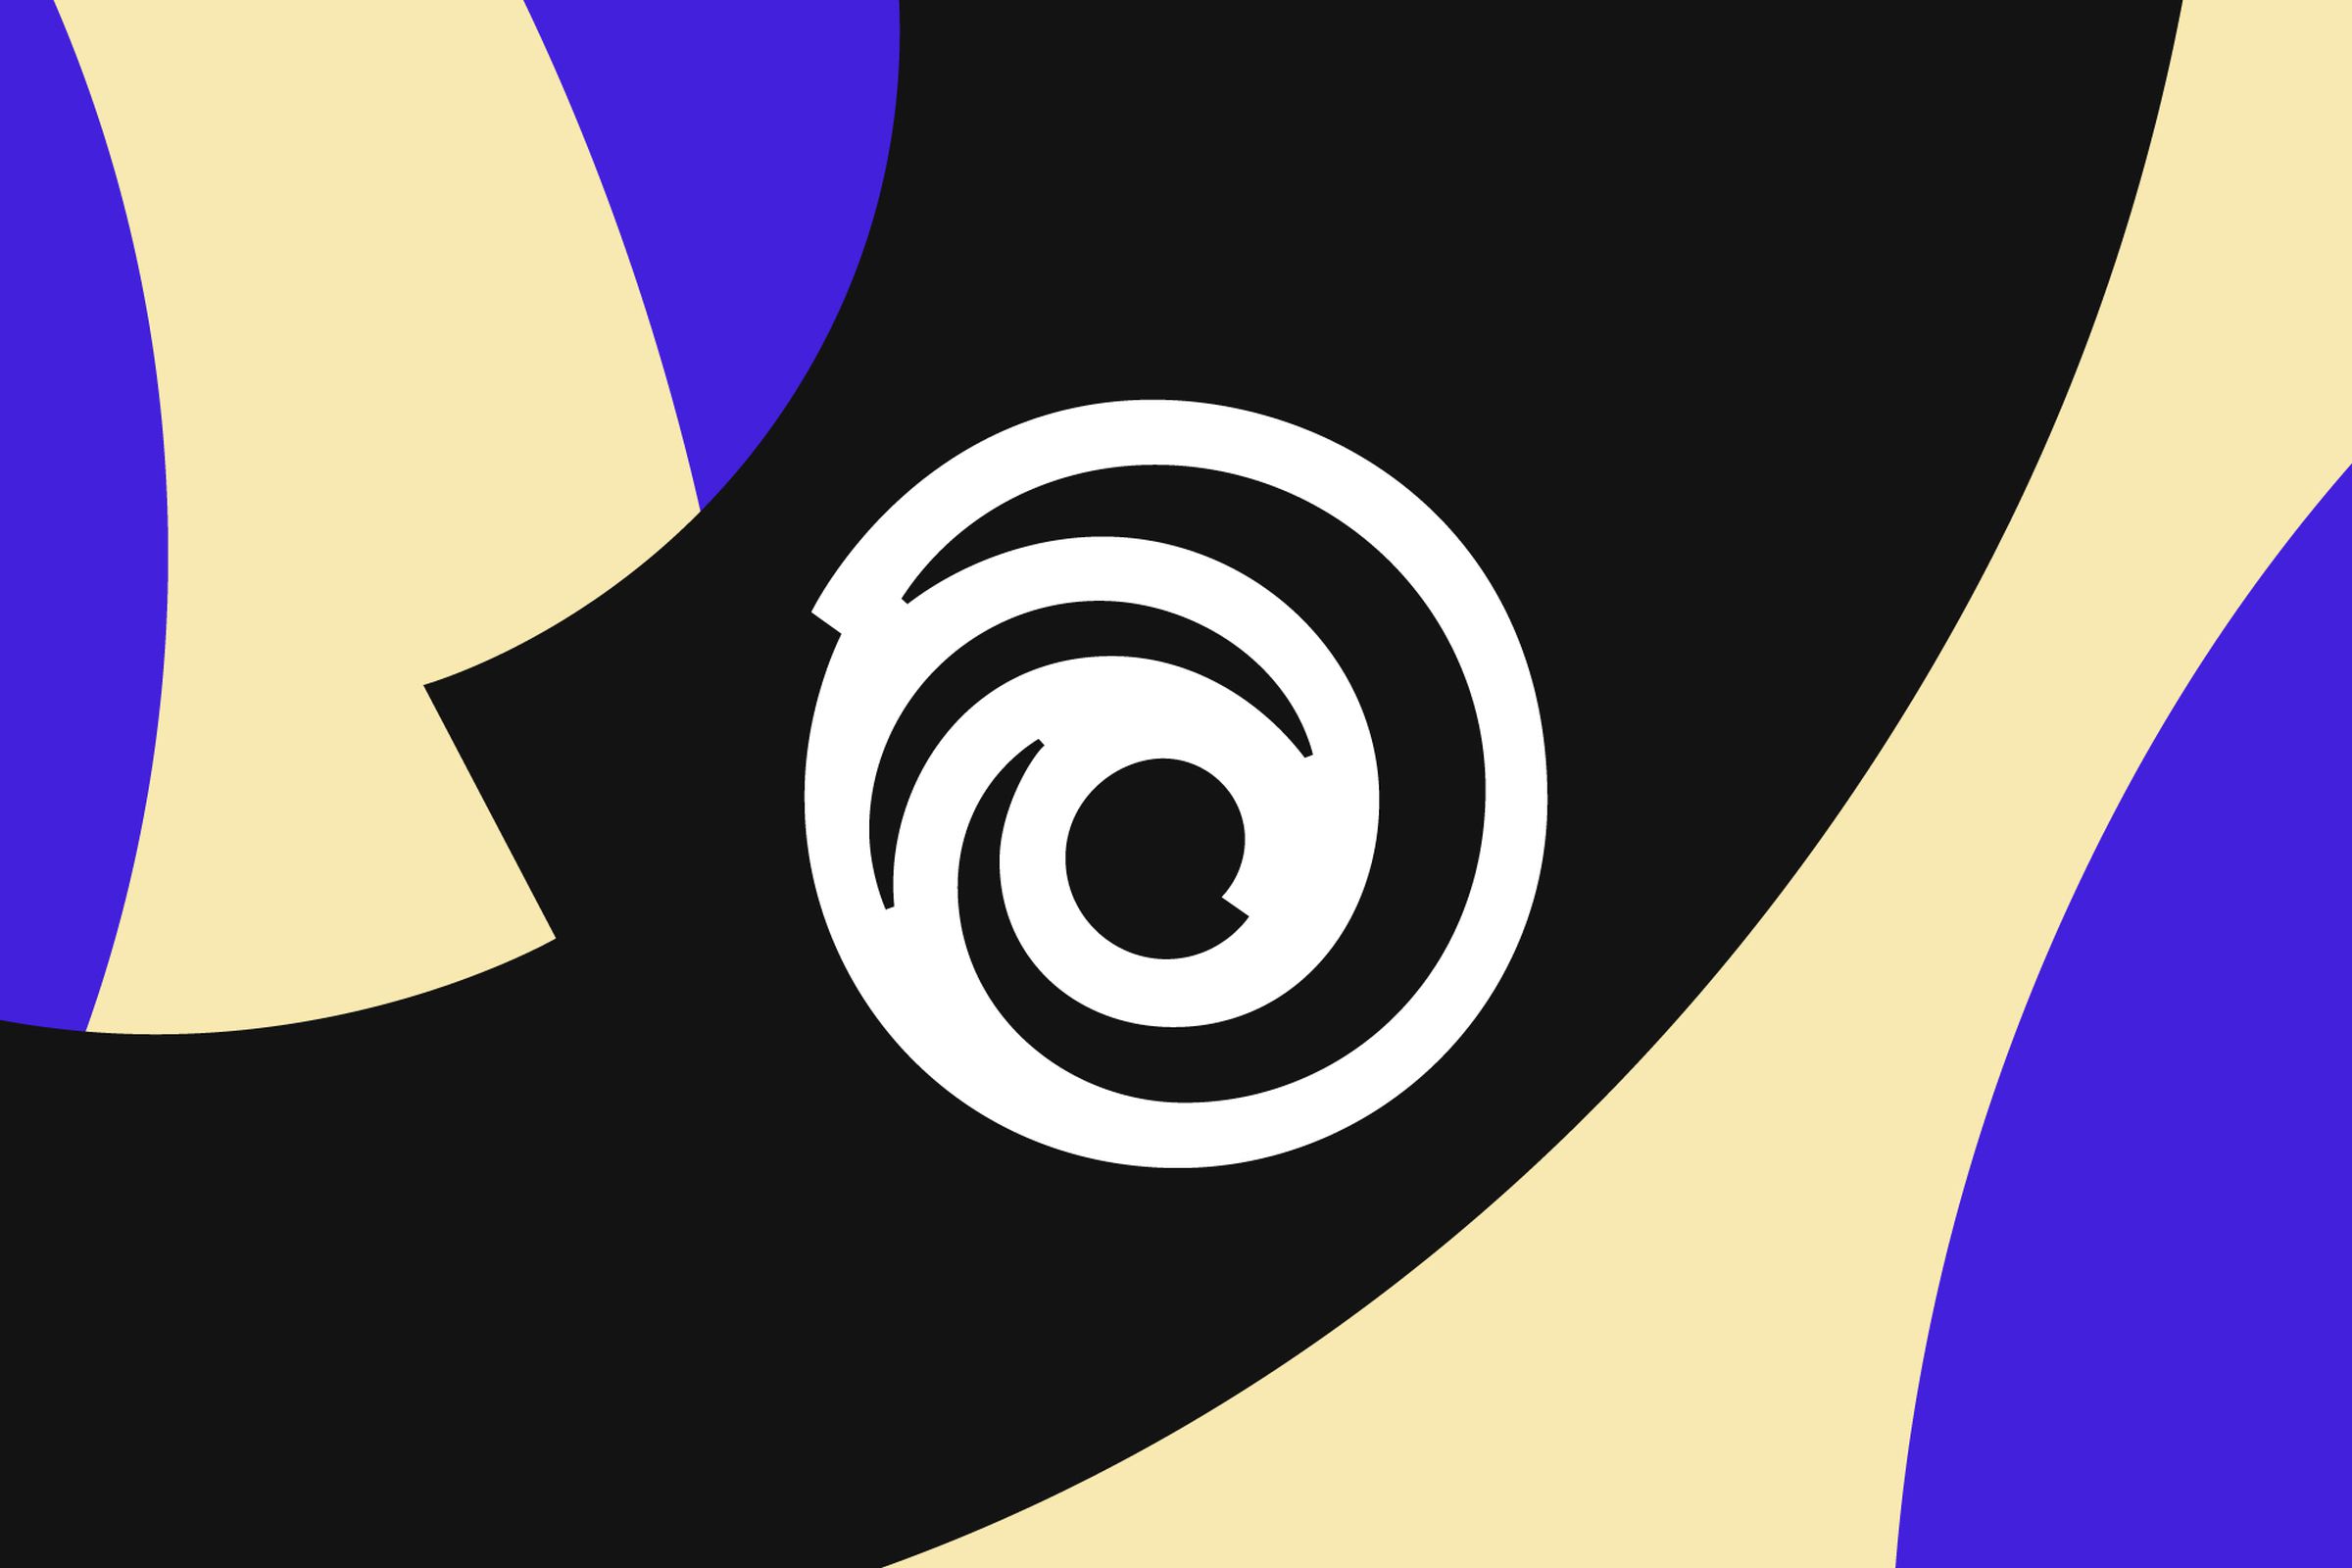 An illustration of the Ubisoft logo.